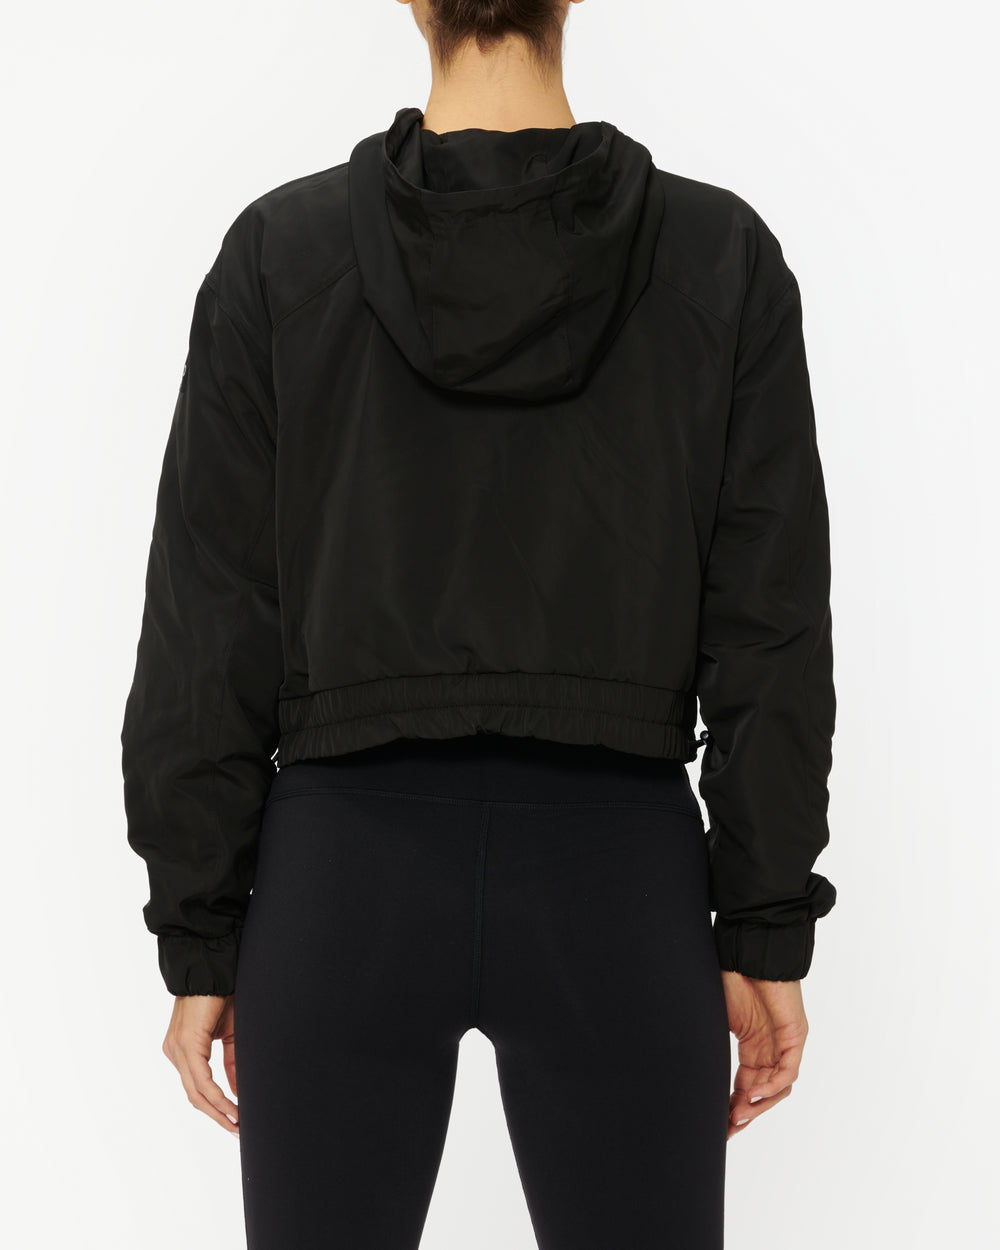 Alo Yoga New INTENT JACKET Hooded Pullover Full Zip Jacket Size Medium